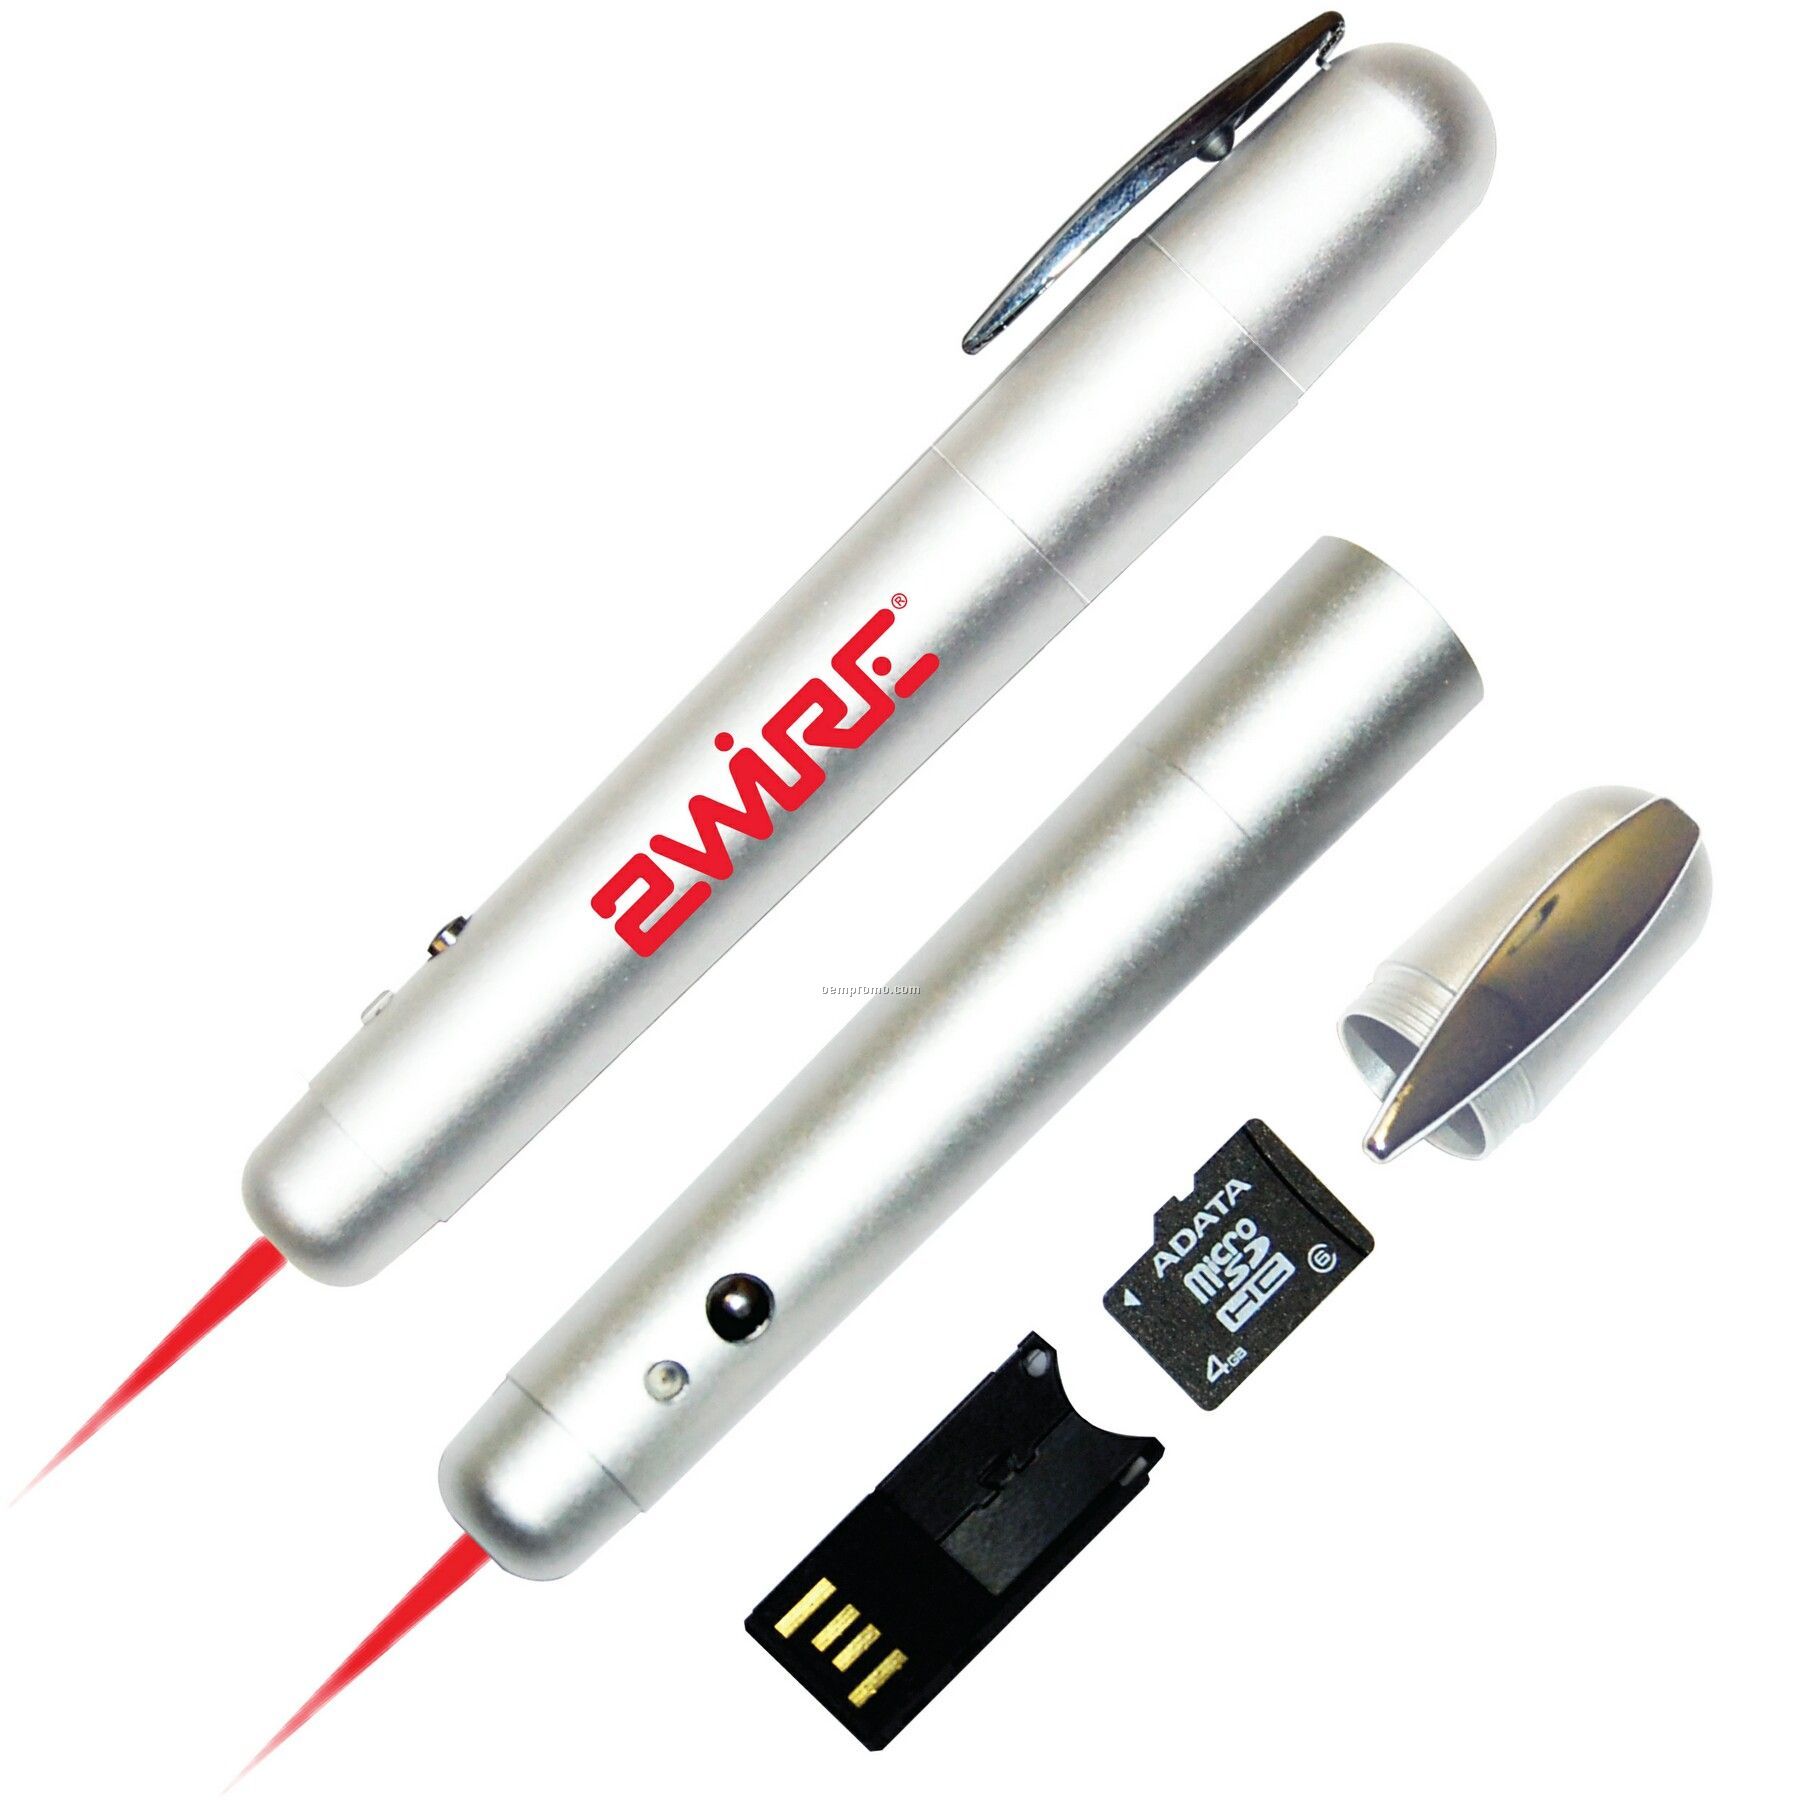 Alpec Comet USB Laser Pointer - 4 Gb